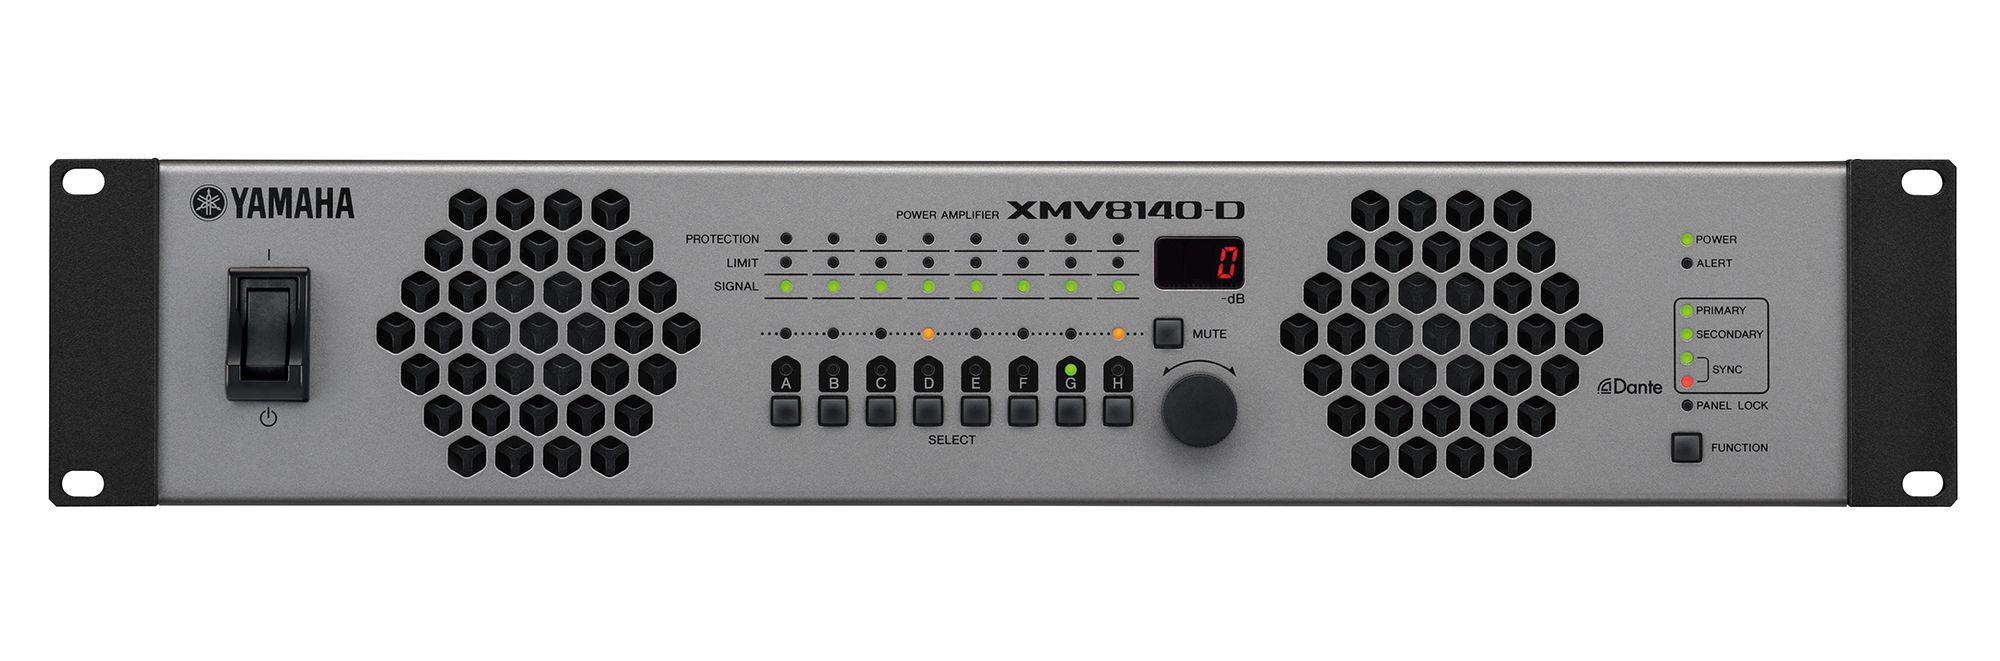 Yamaha XMV8140-D Power Amplifier